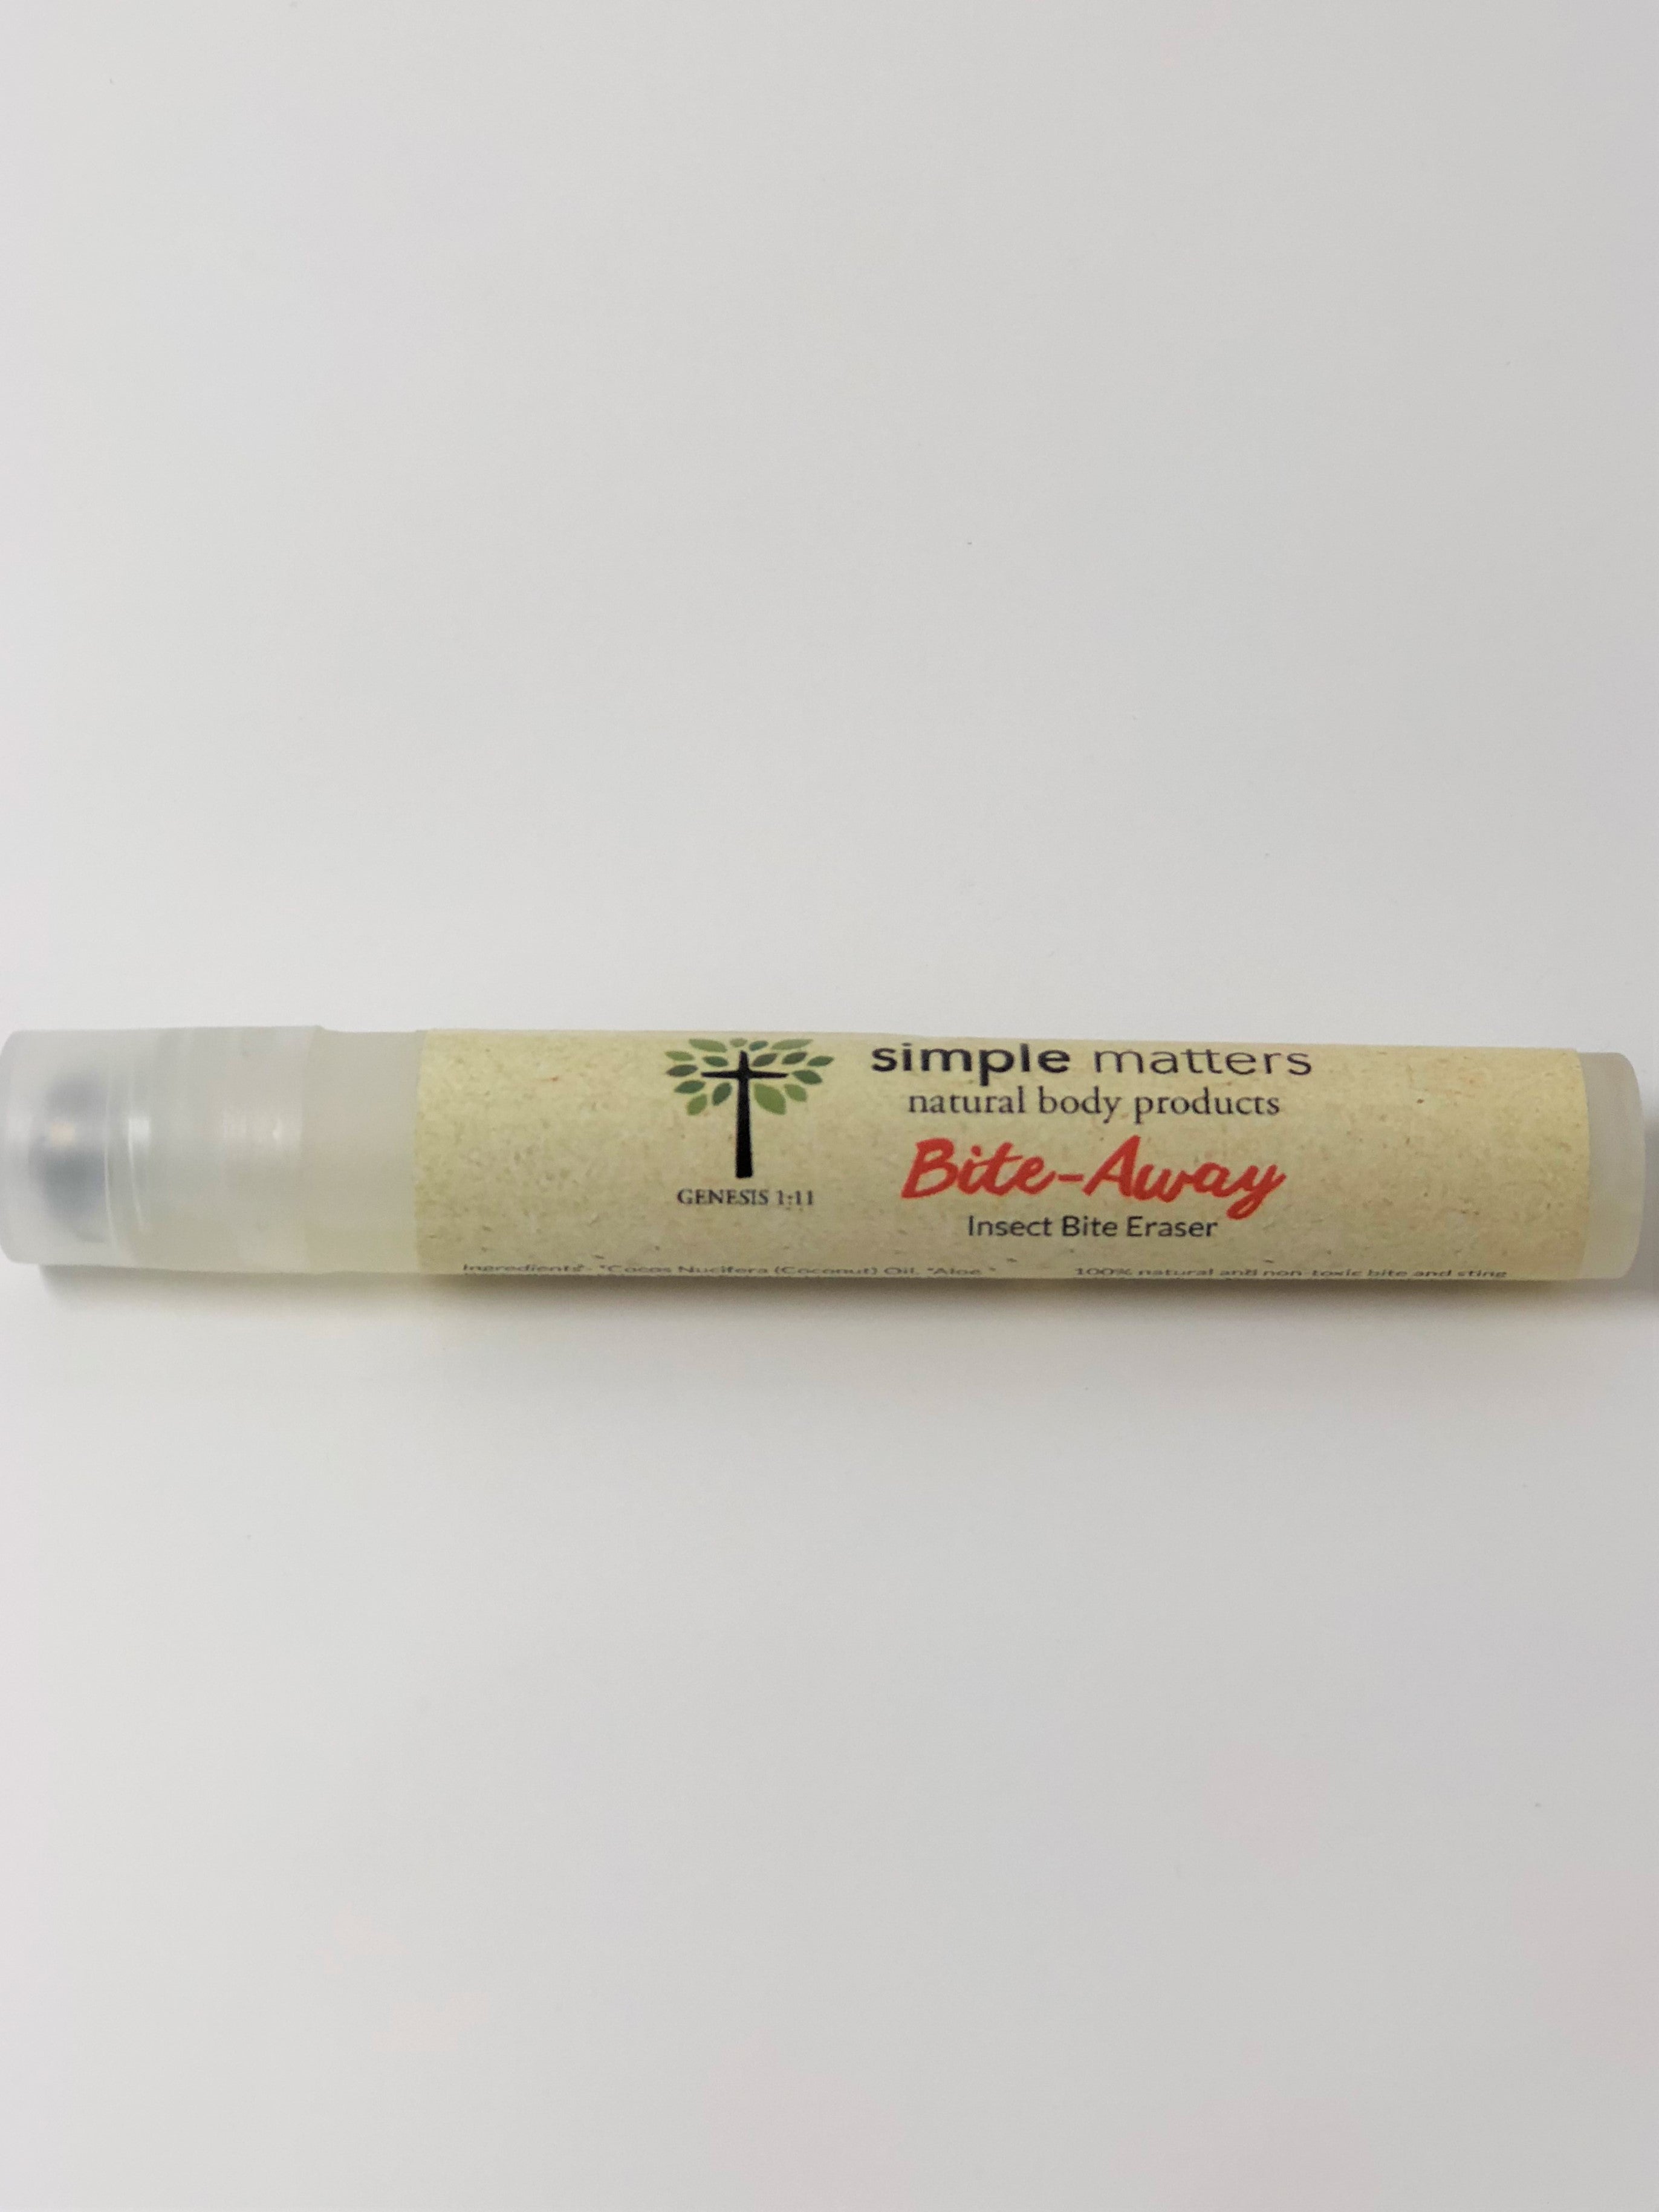 Bite-Away - Insect Bite Eraser – Simple Matters, LLC